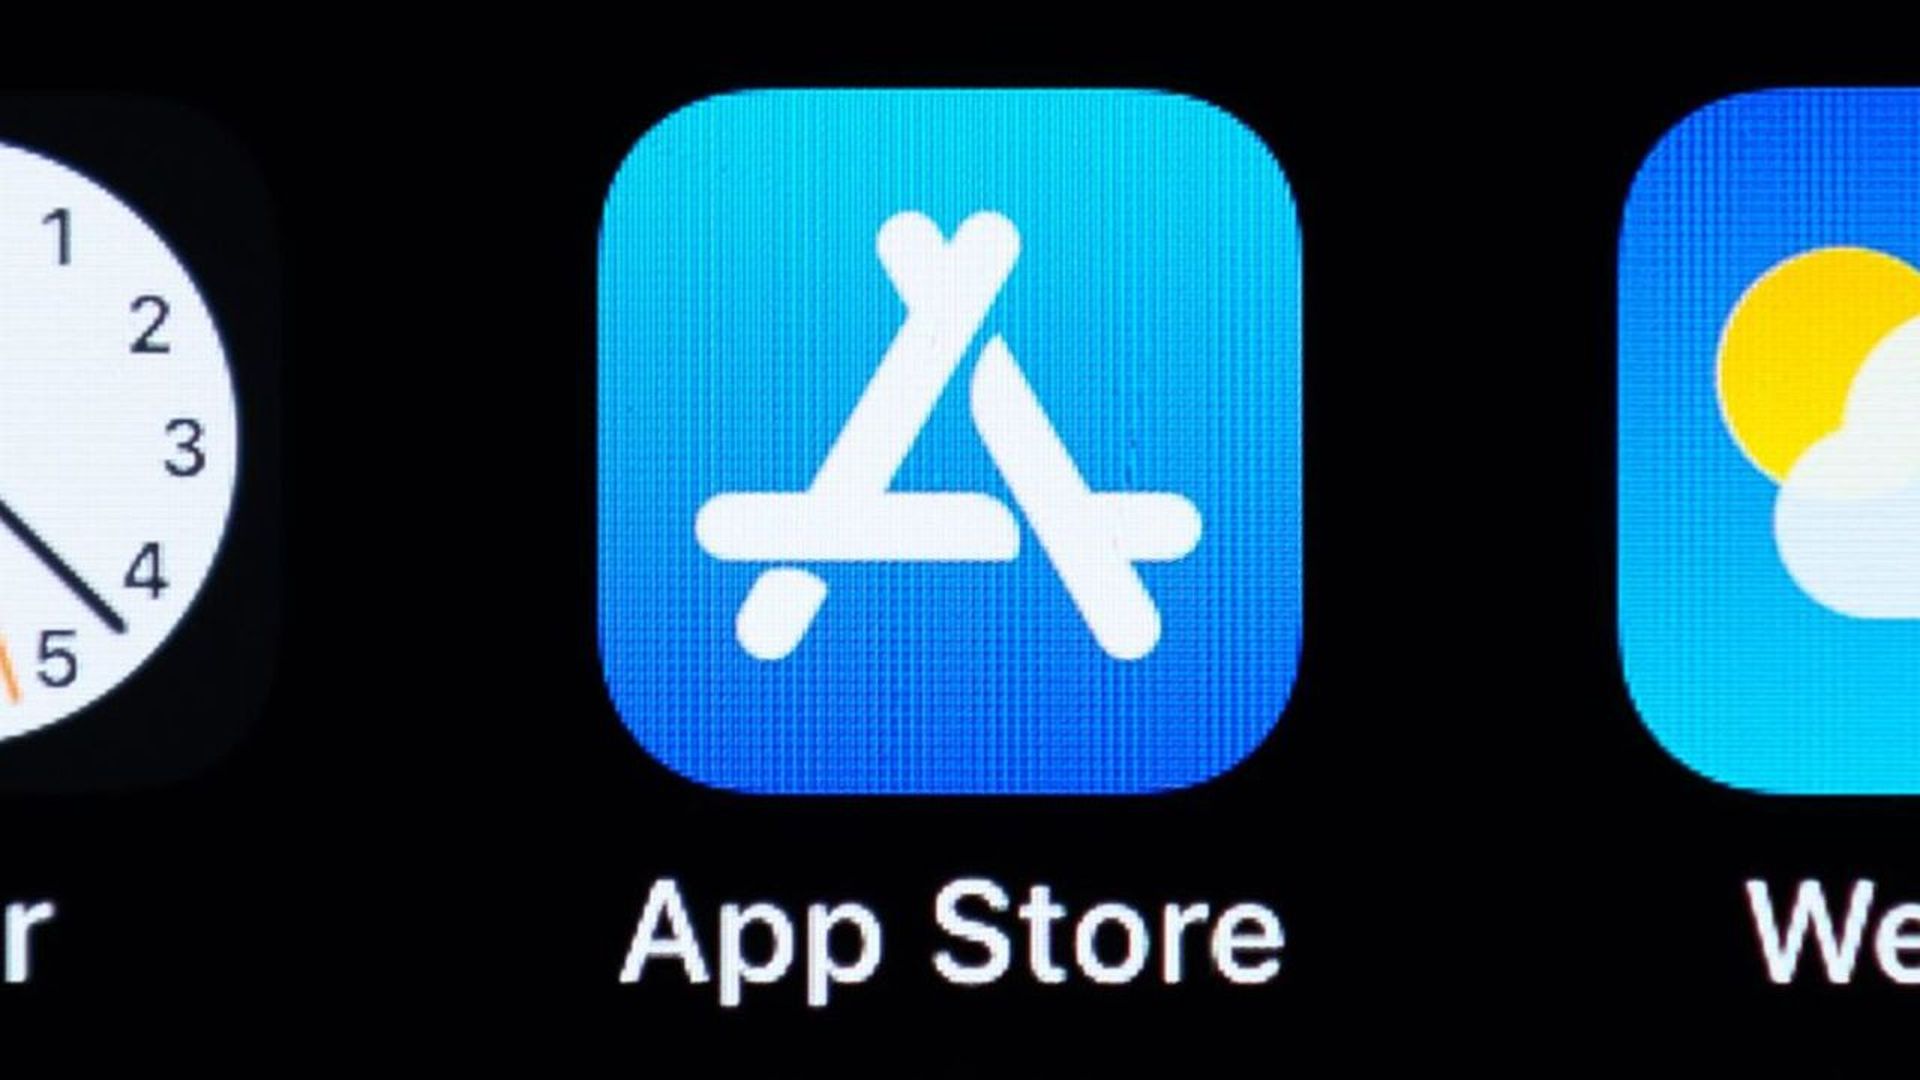 Apple app store app